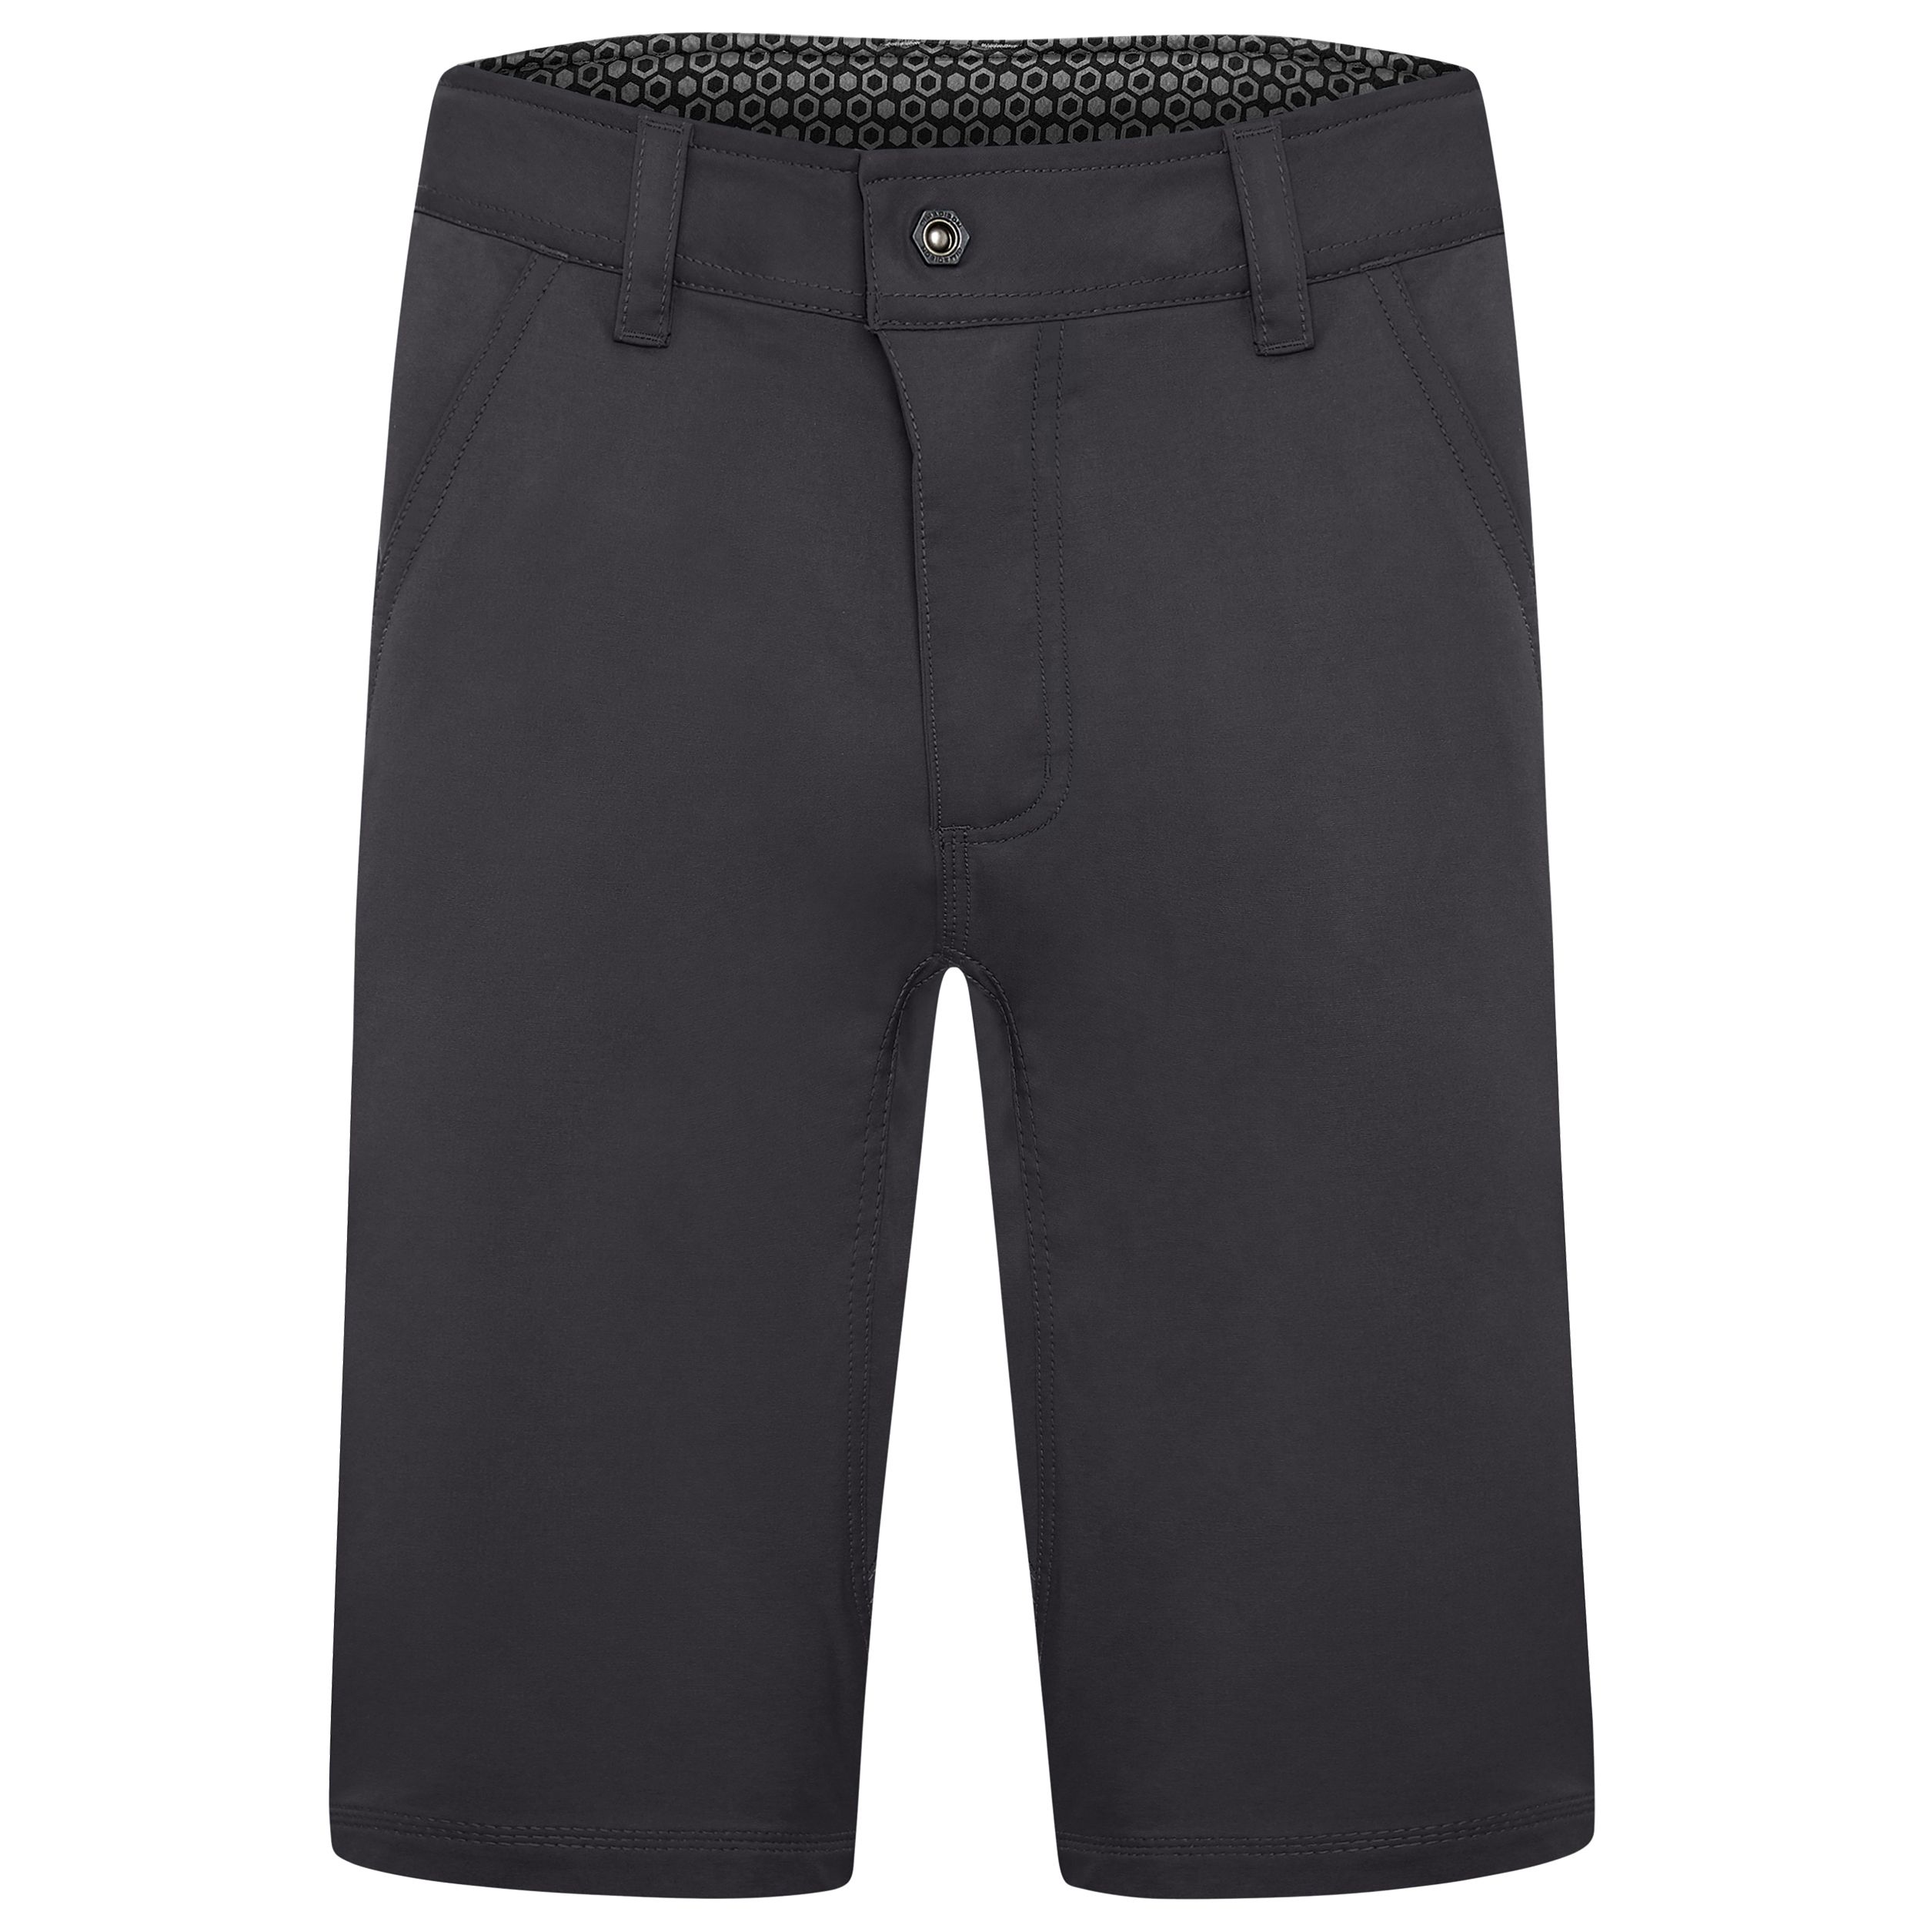 Madison Roam Mtb Shorts - £25.98 | Shorts - Baggy Loose Fit & 3/4s ...